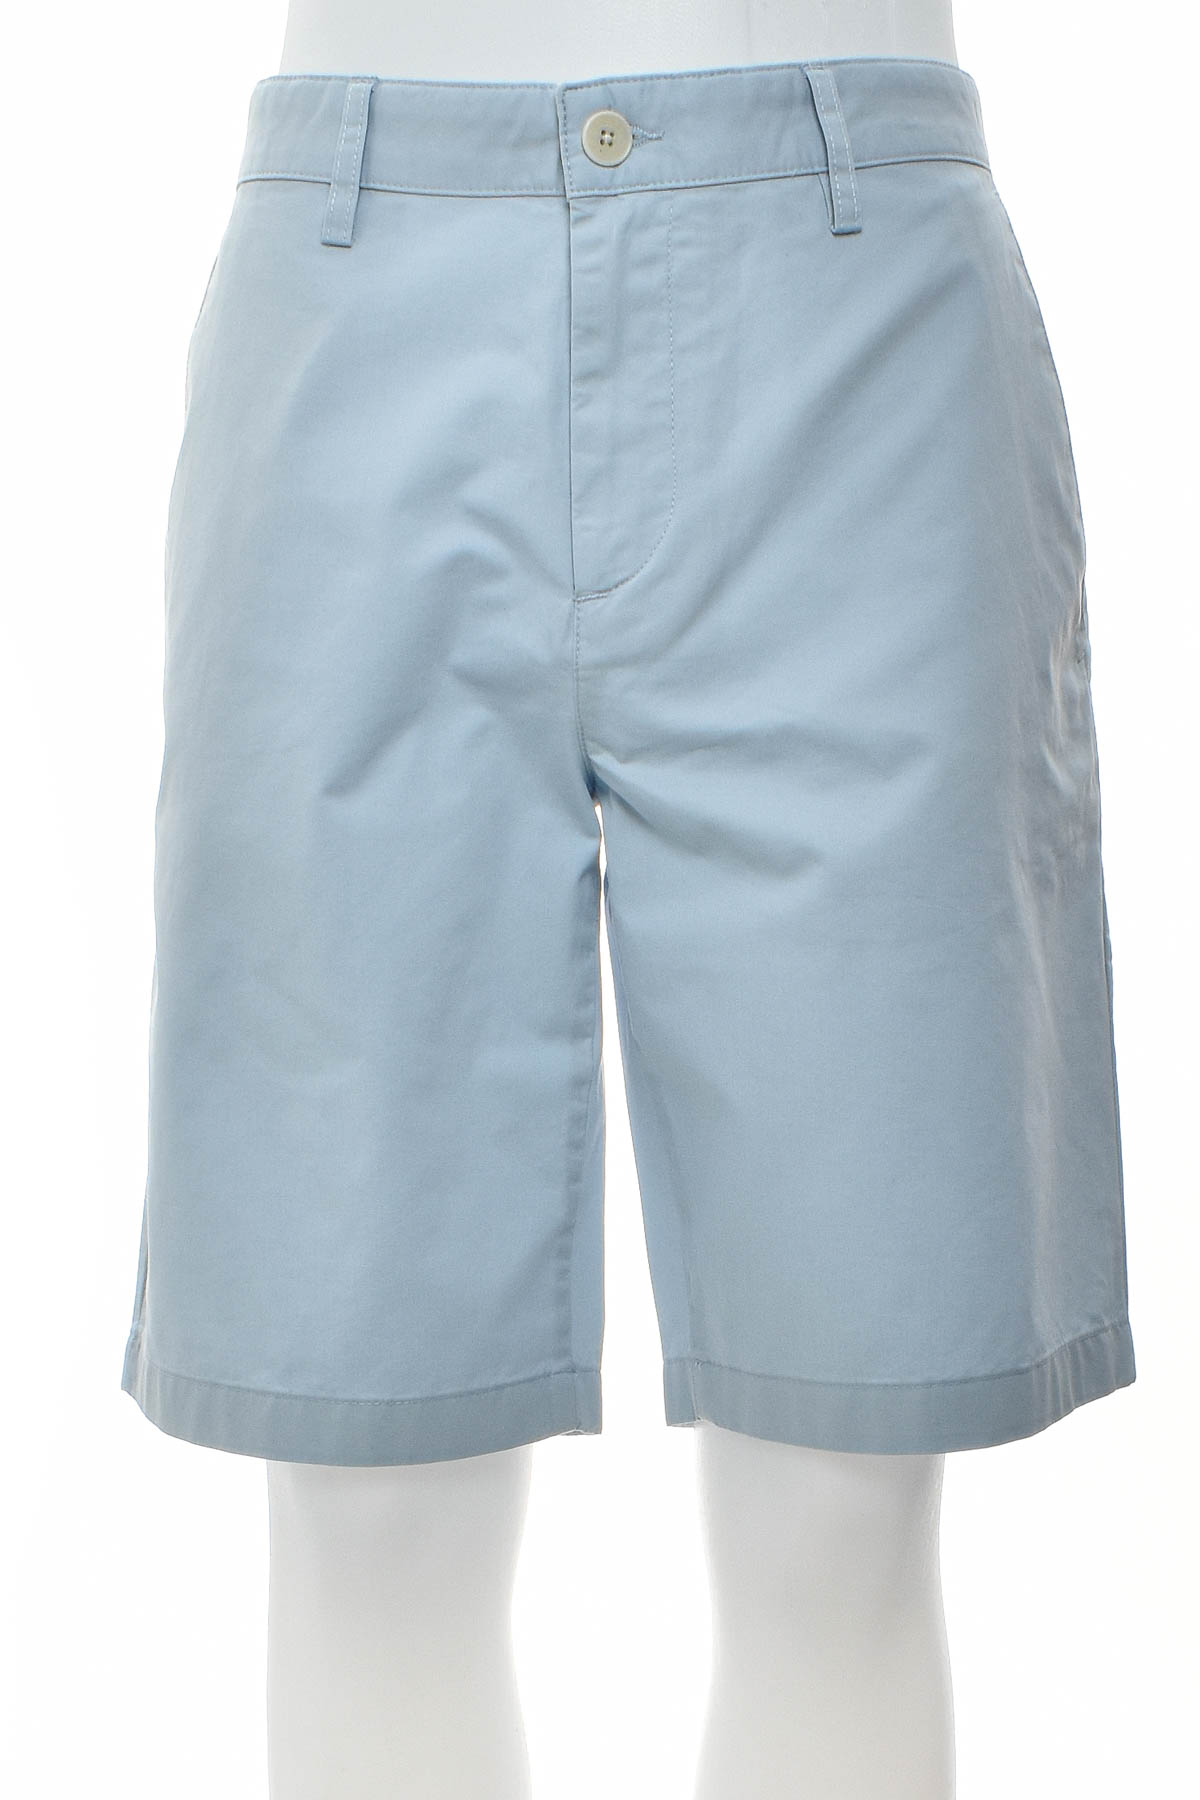 Men's shorts - Aigle - 0